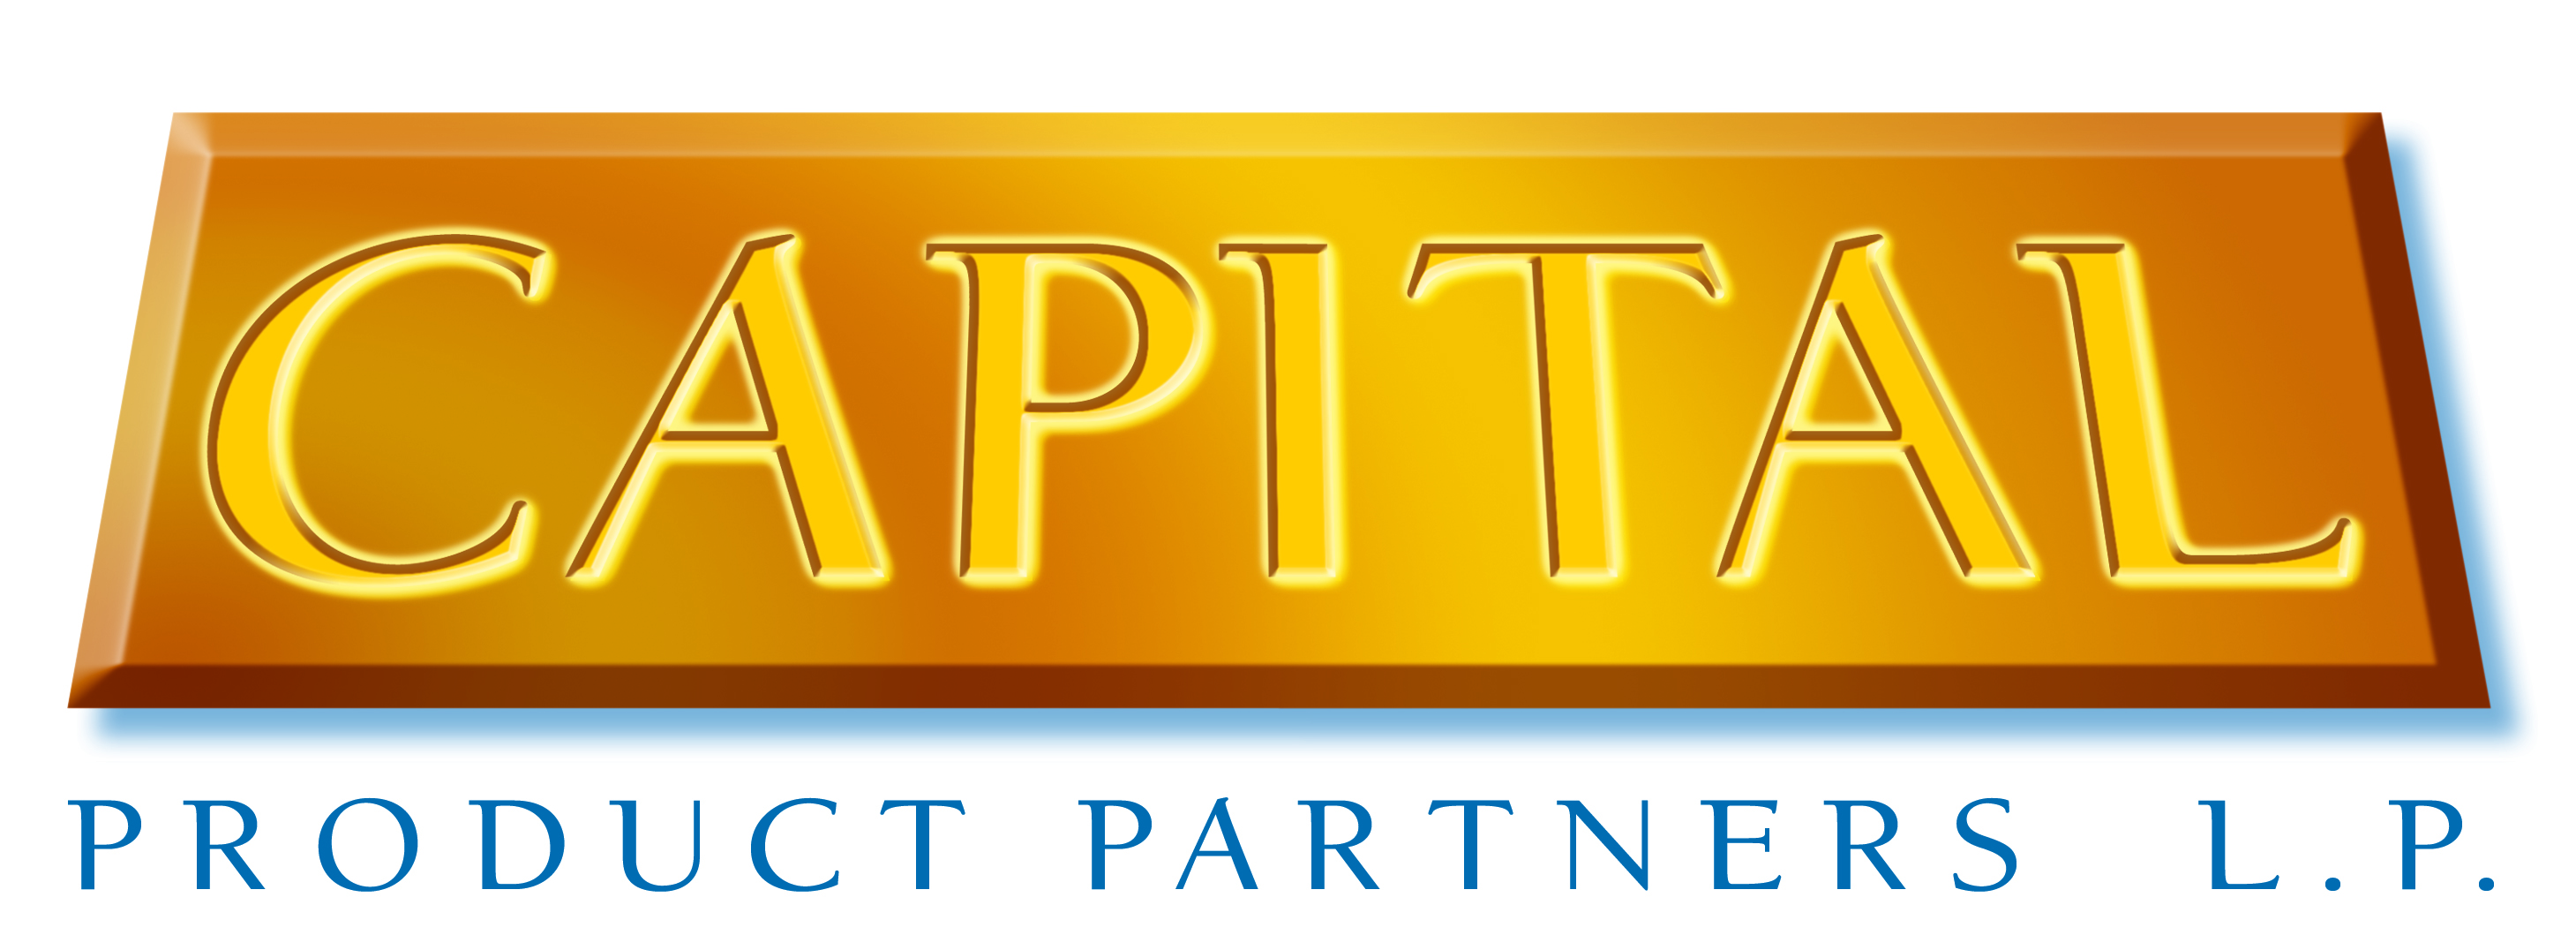 CPLP Logo Large